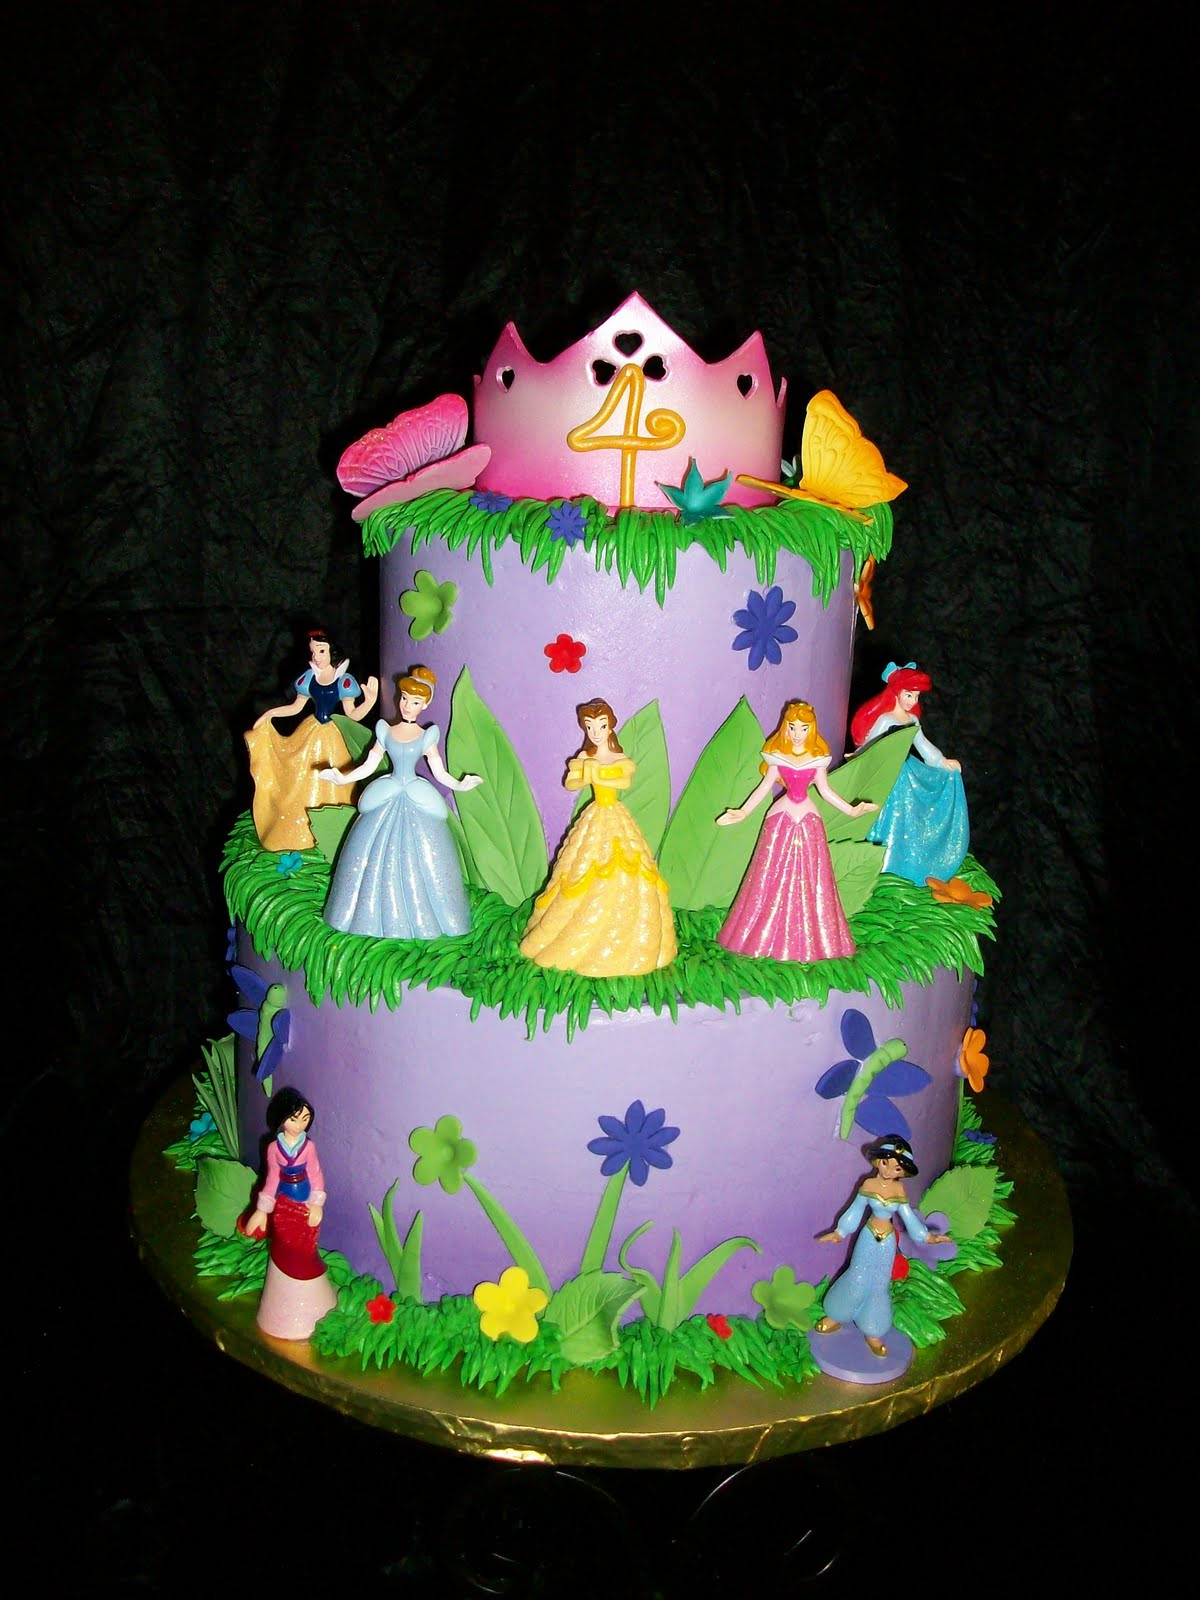 Best ideas about Disney Princess Birthday Cake
. Save or Pin Sandra s Cakes Aug 8 2010 Now.